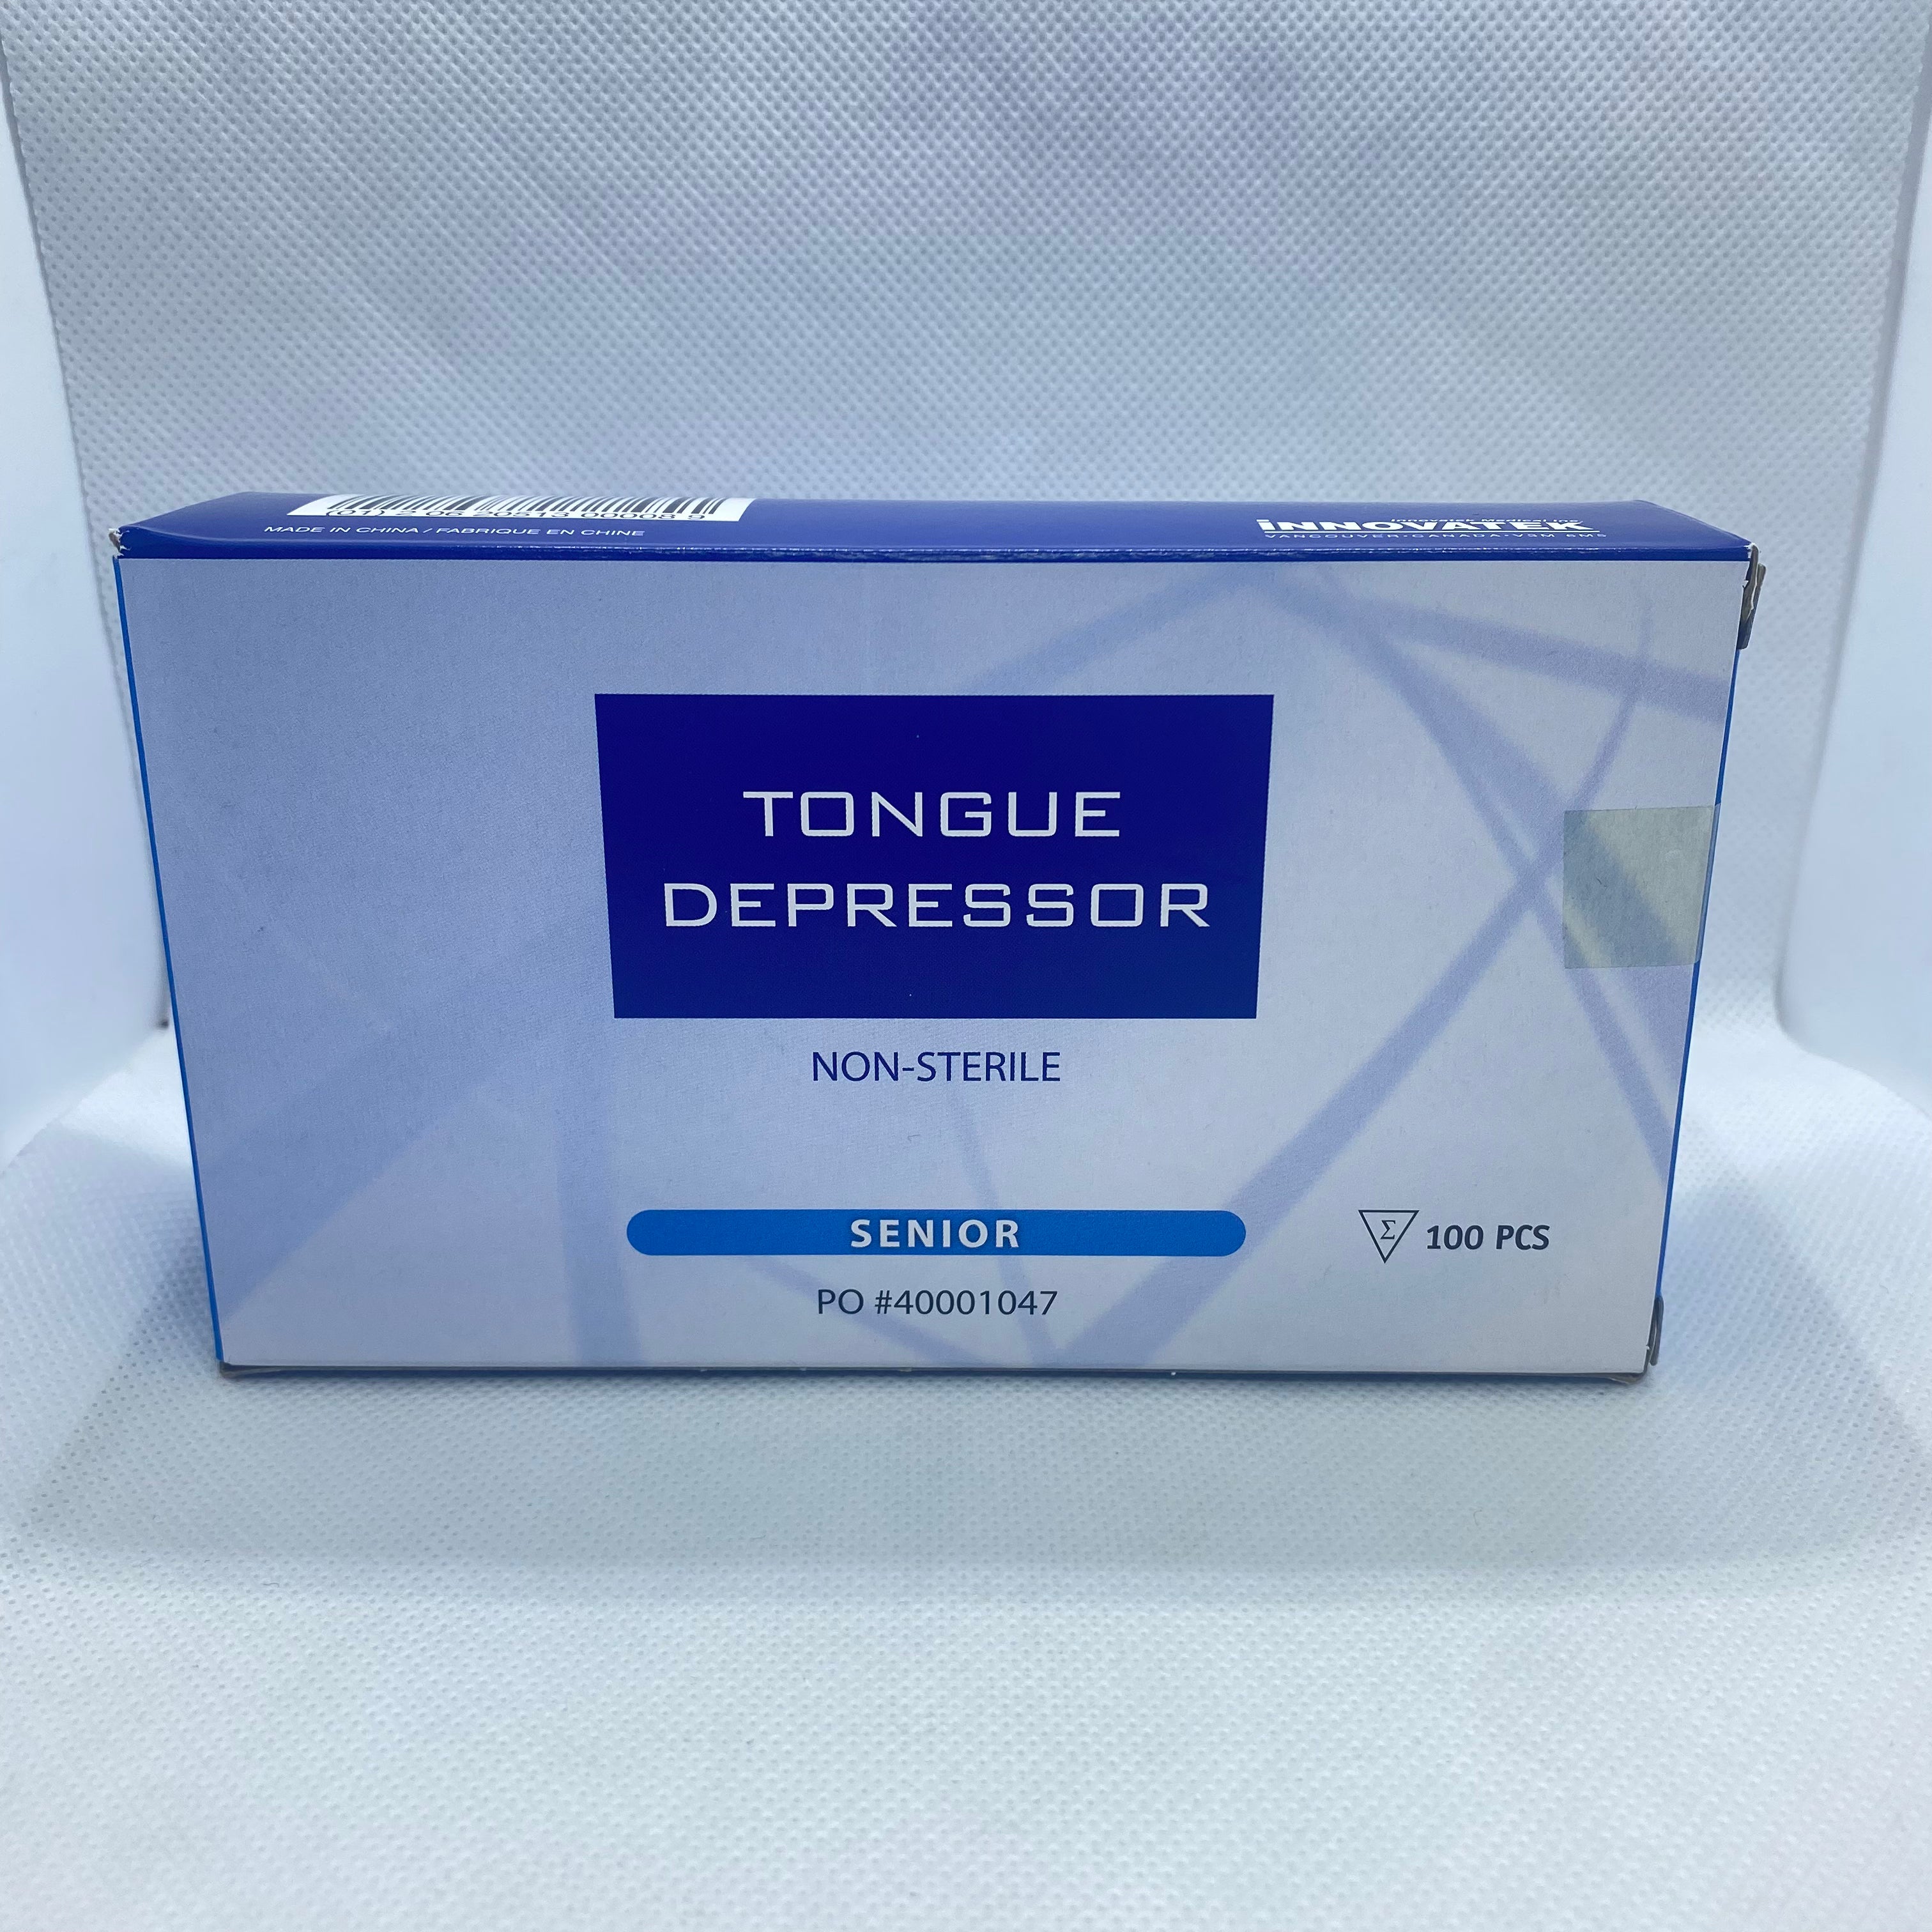 Senior TONGUE depressor 100/BX